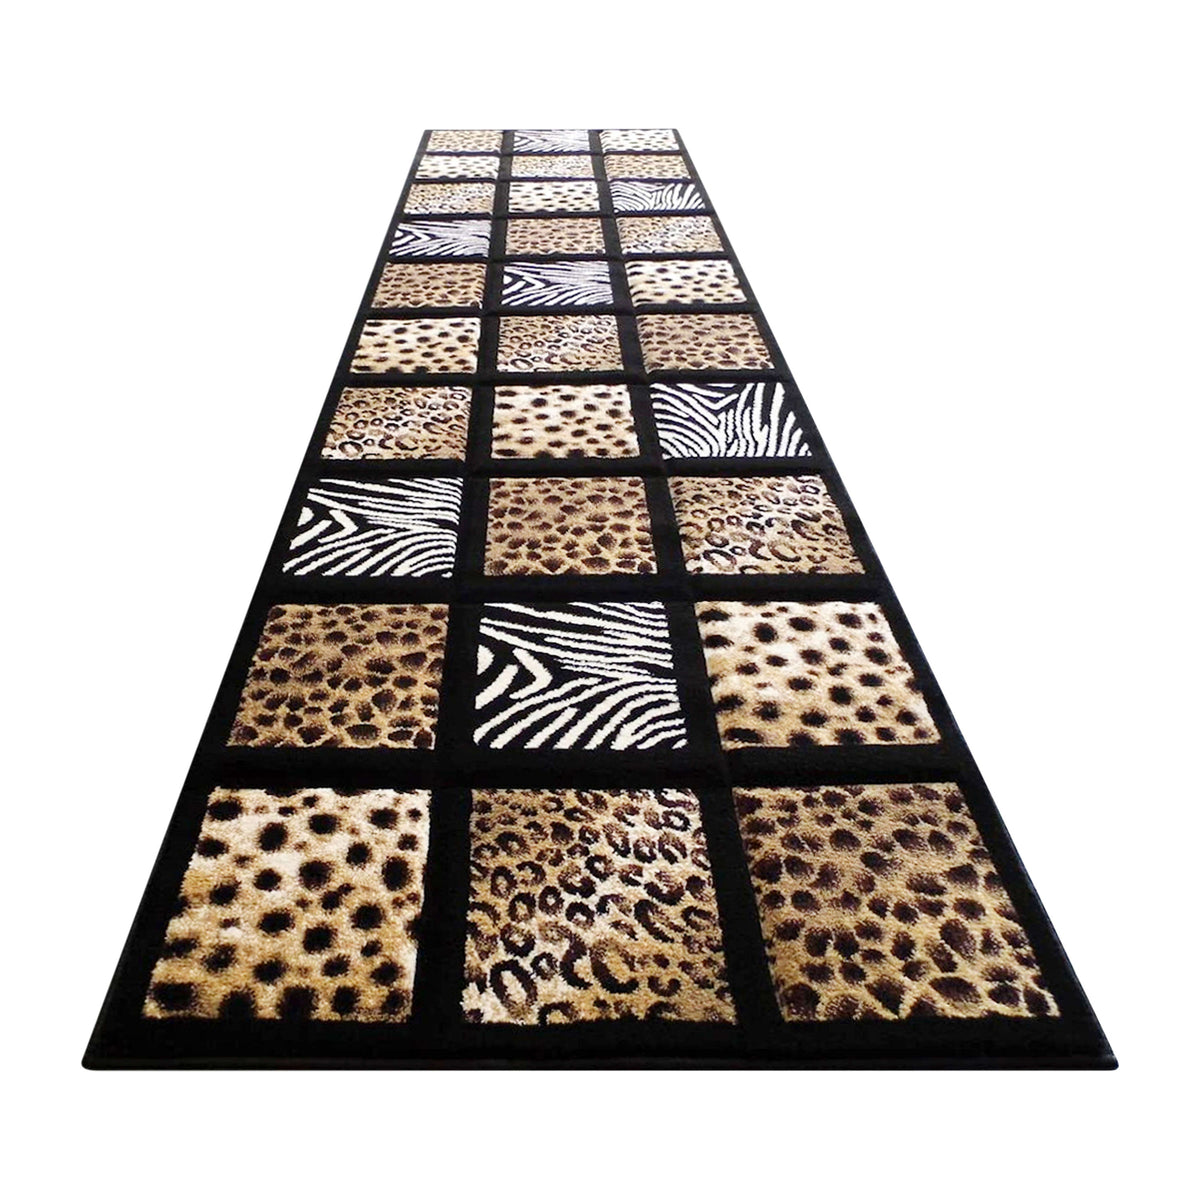 3' x 7' |#| Wildlife Animal Print Area Rug with Raised Squares - Black Background - 3' x 7'